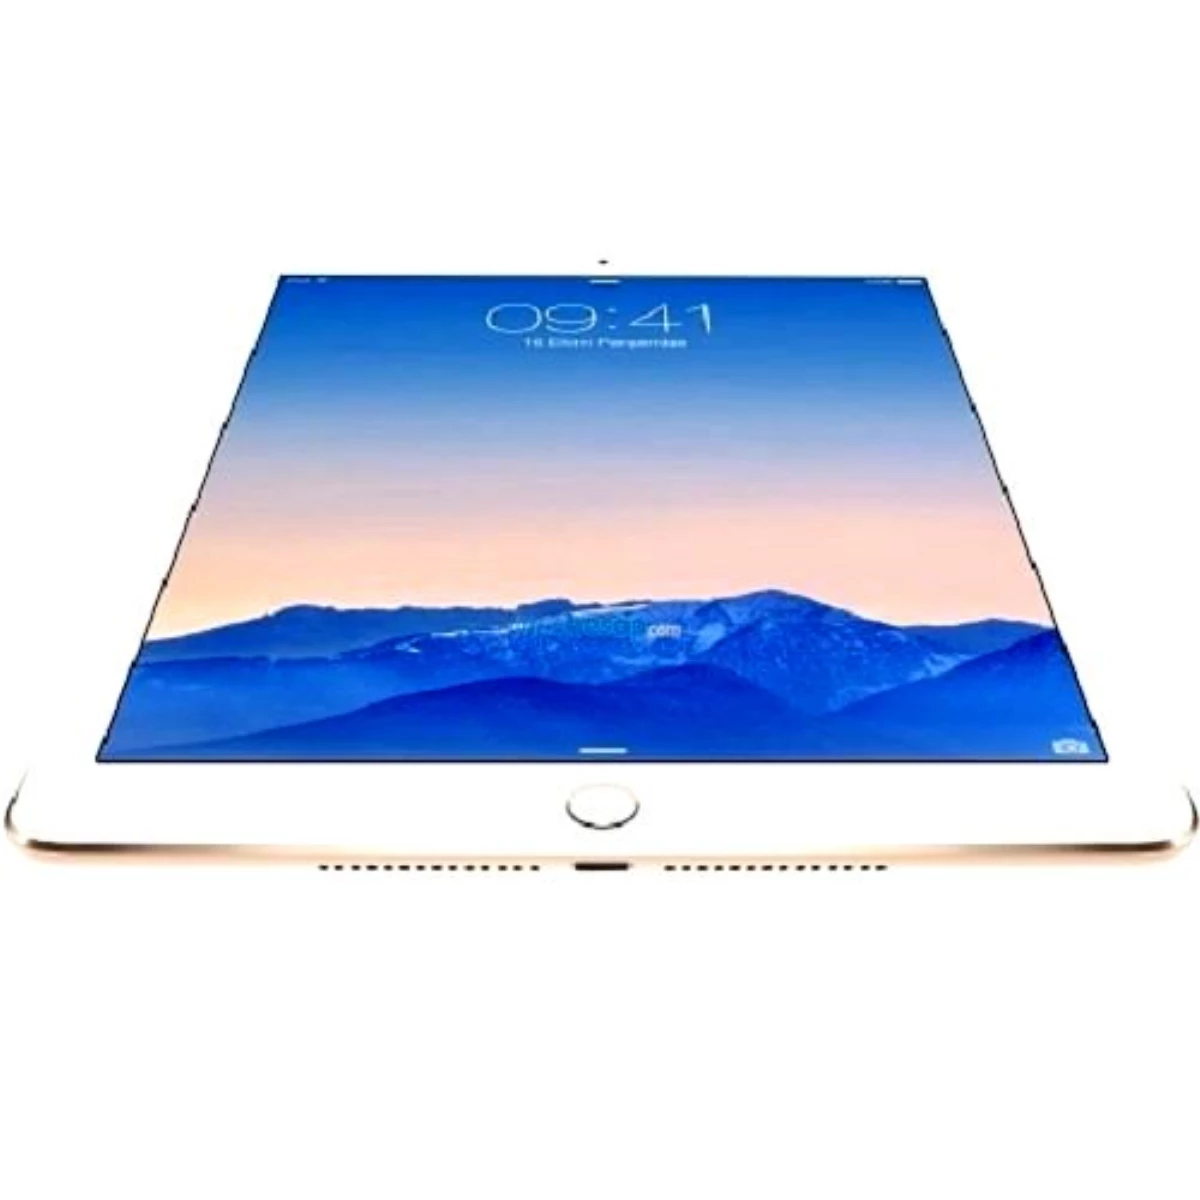 Apple İpad Air2 128gb Wi-Fi + 4g Gold Tablet (Mh1g2tu/a)